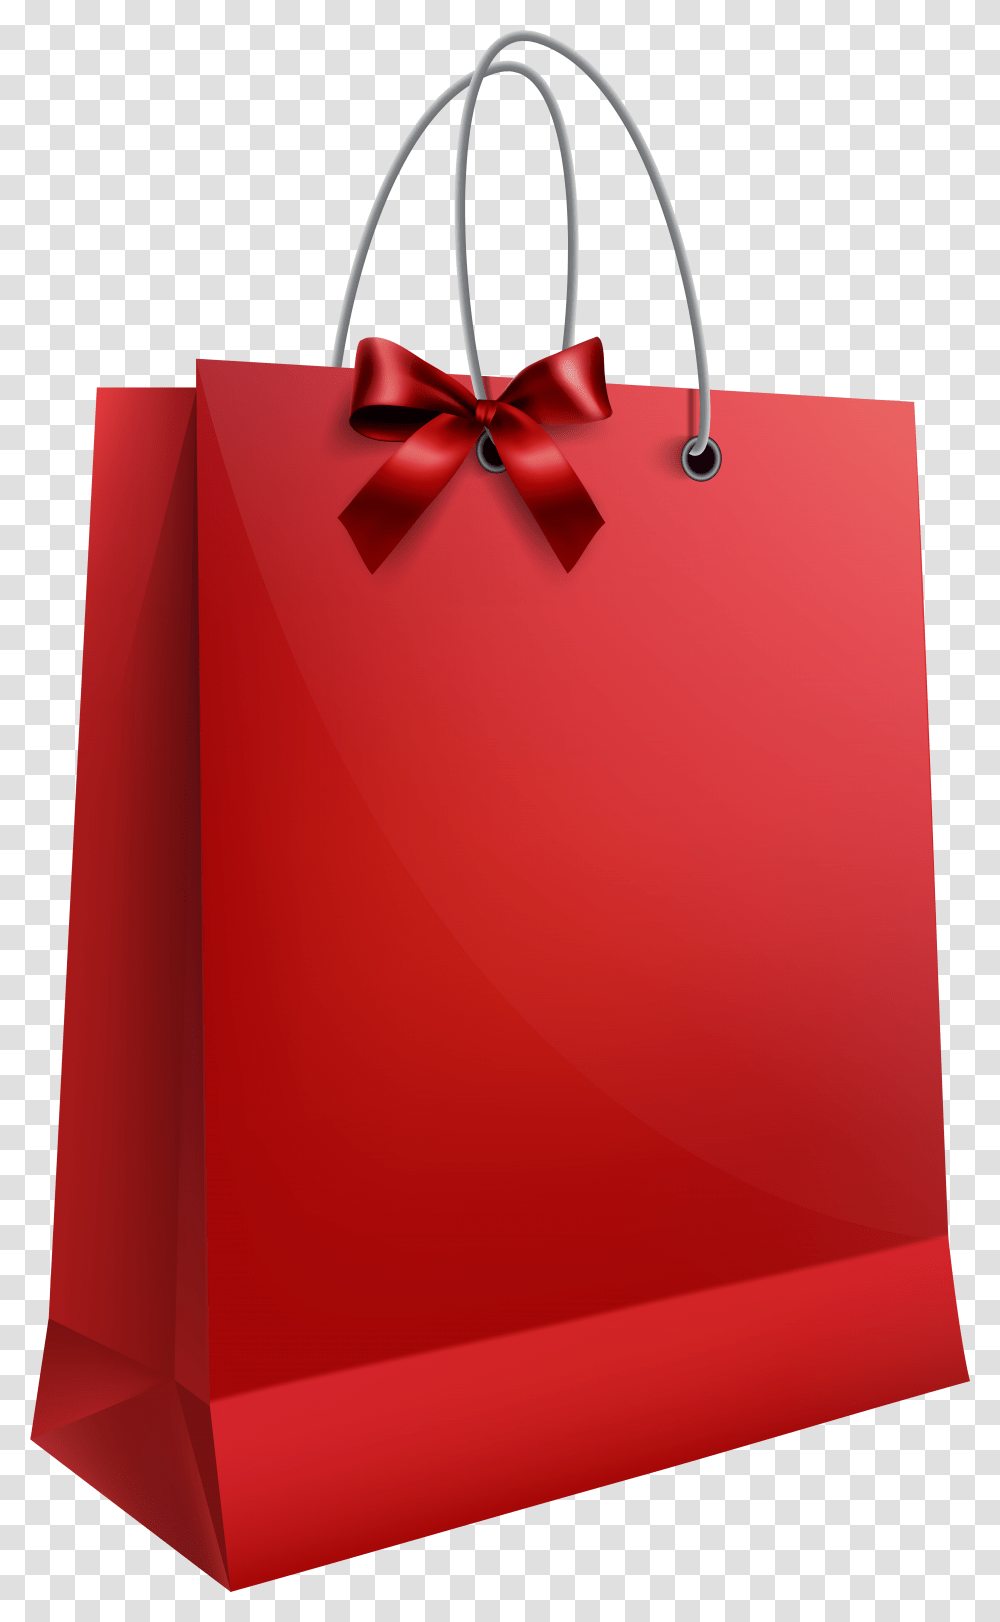 Bag Clipart Gift Christmas Gift Bag Clipart, Shopping Bag, Tote Bag, Handbag, Accessories Transparent Png